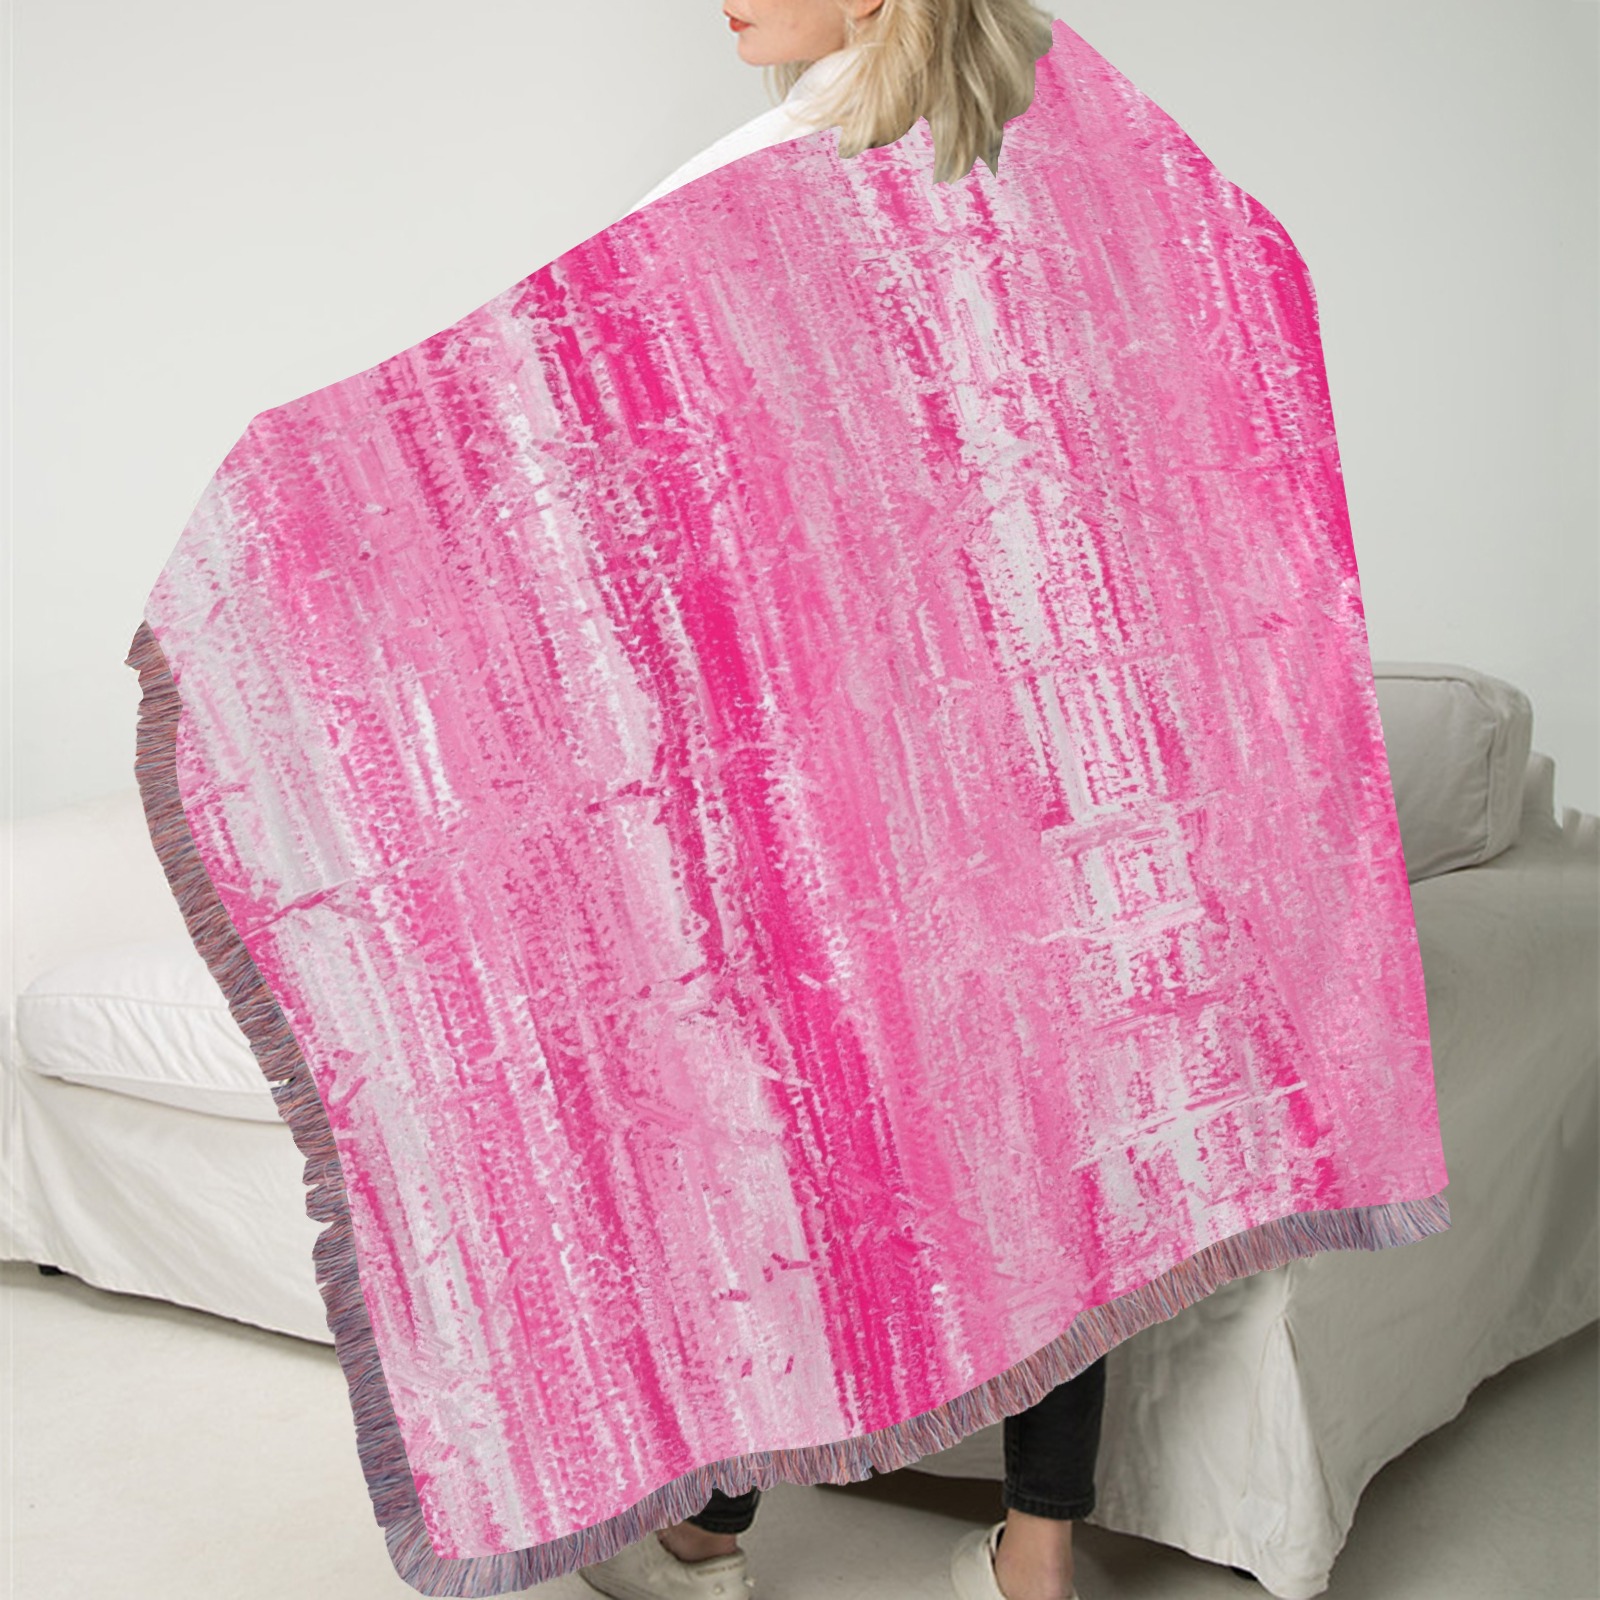 confetti 12 Ultra-Soft Fringe Blanket 40"x50" (Mixed Pink)